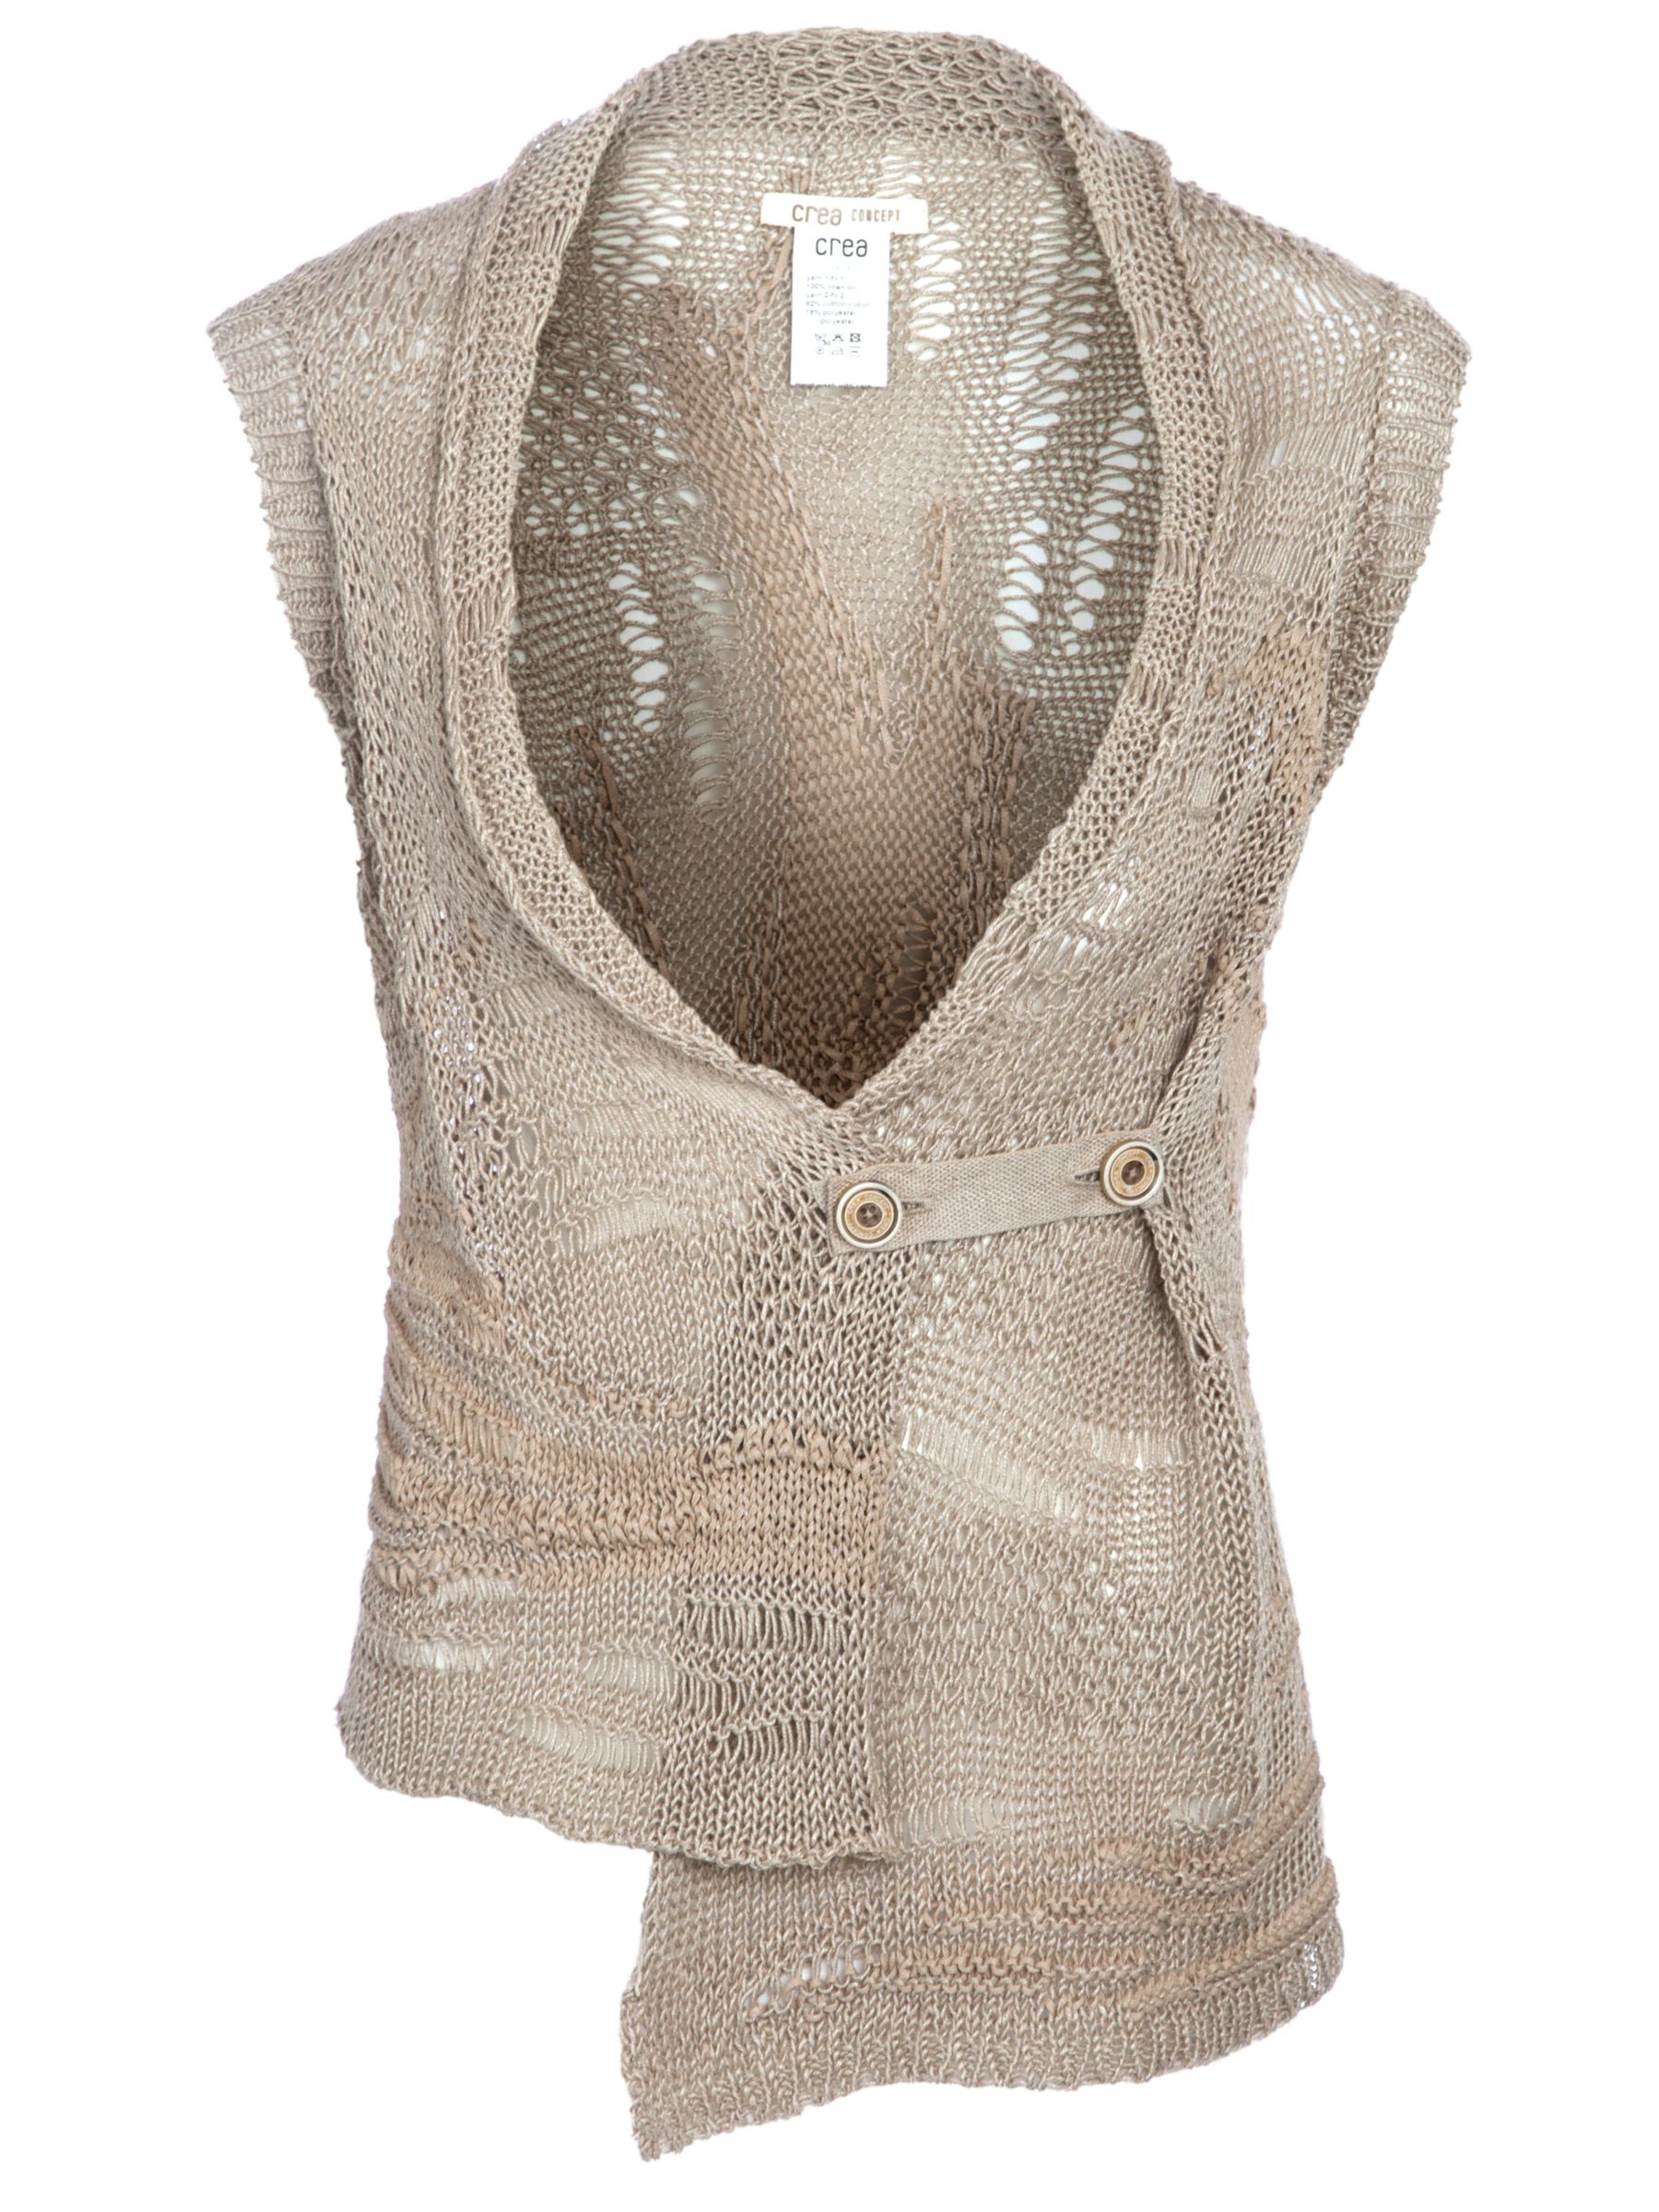 Crea Concept Textured Waistcoat, Taupe at John Lewis & Partners